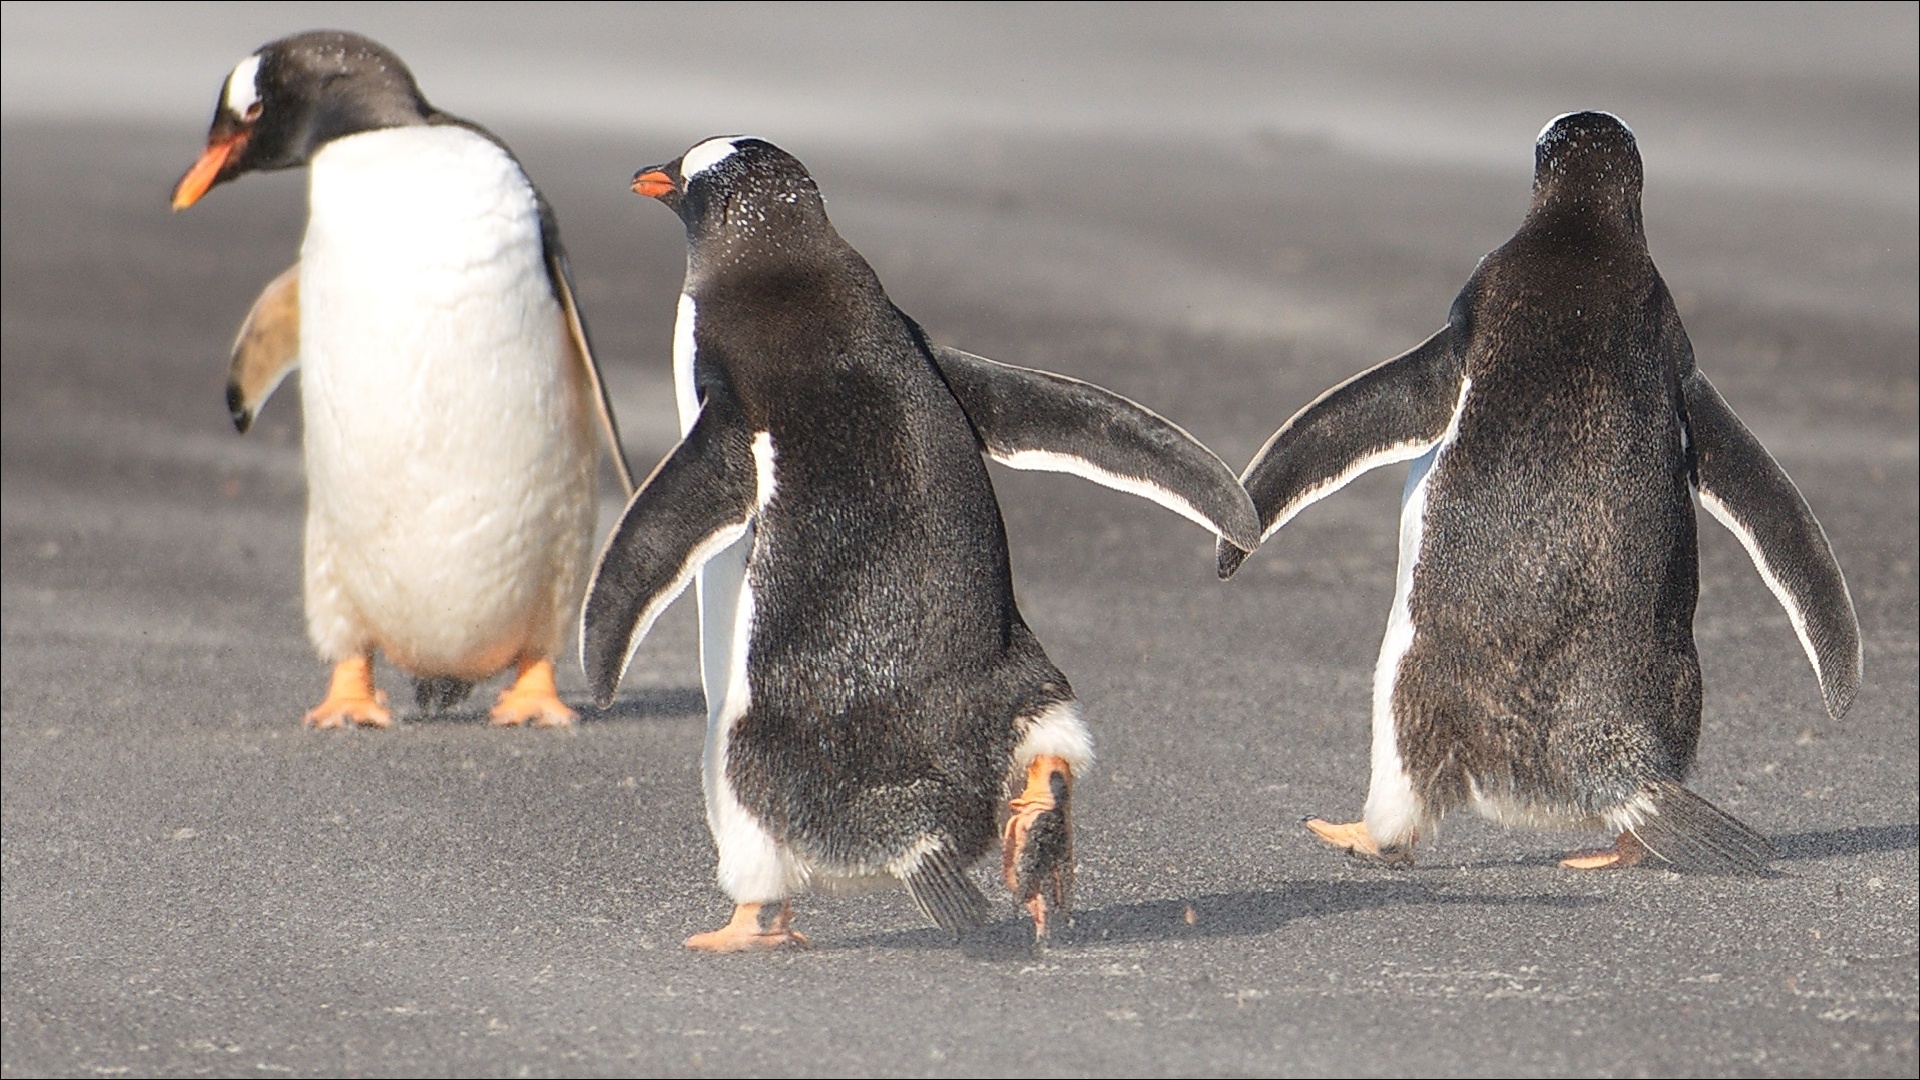 Adorable penguins, Cute bird family, Animal kingdom beauty, Antarctic wildlife, 1920x1080 Full HD Desktop